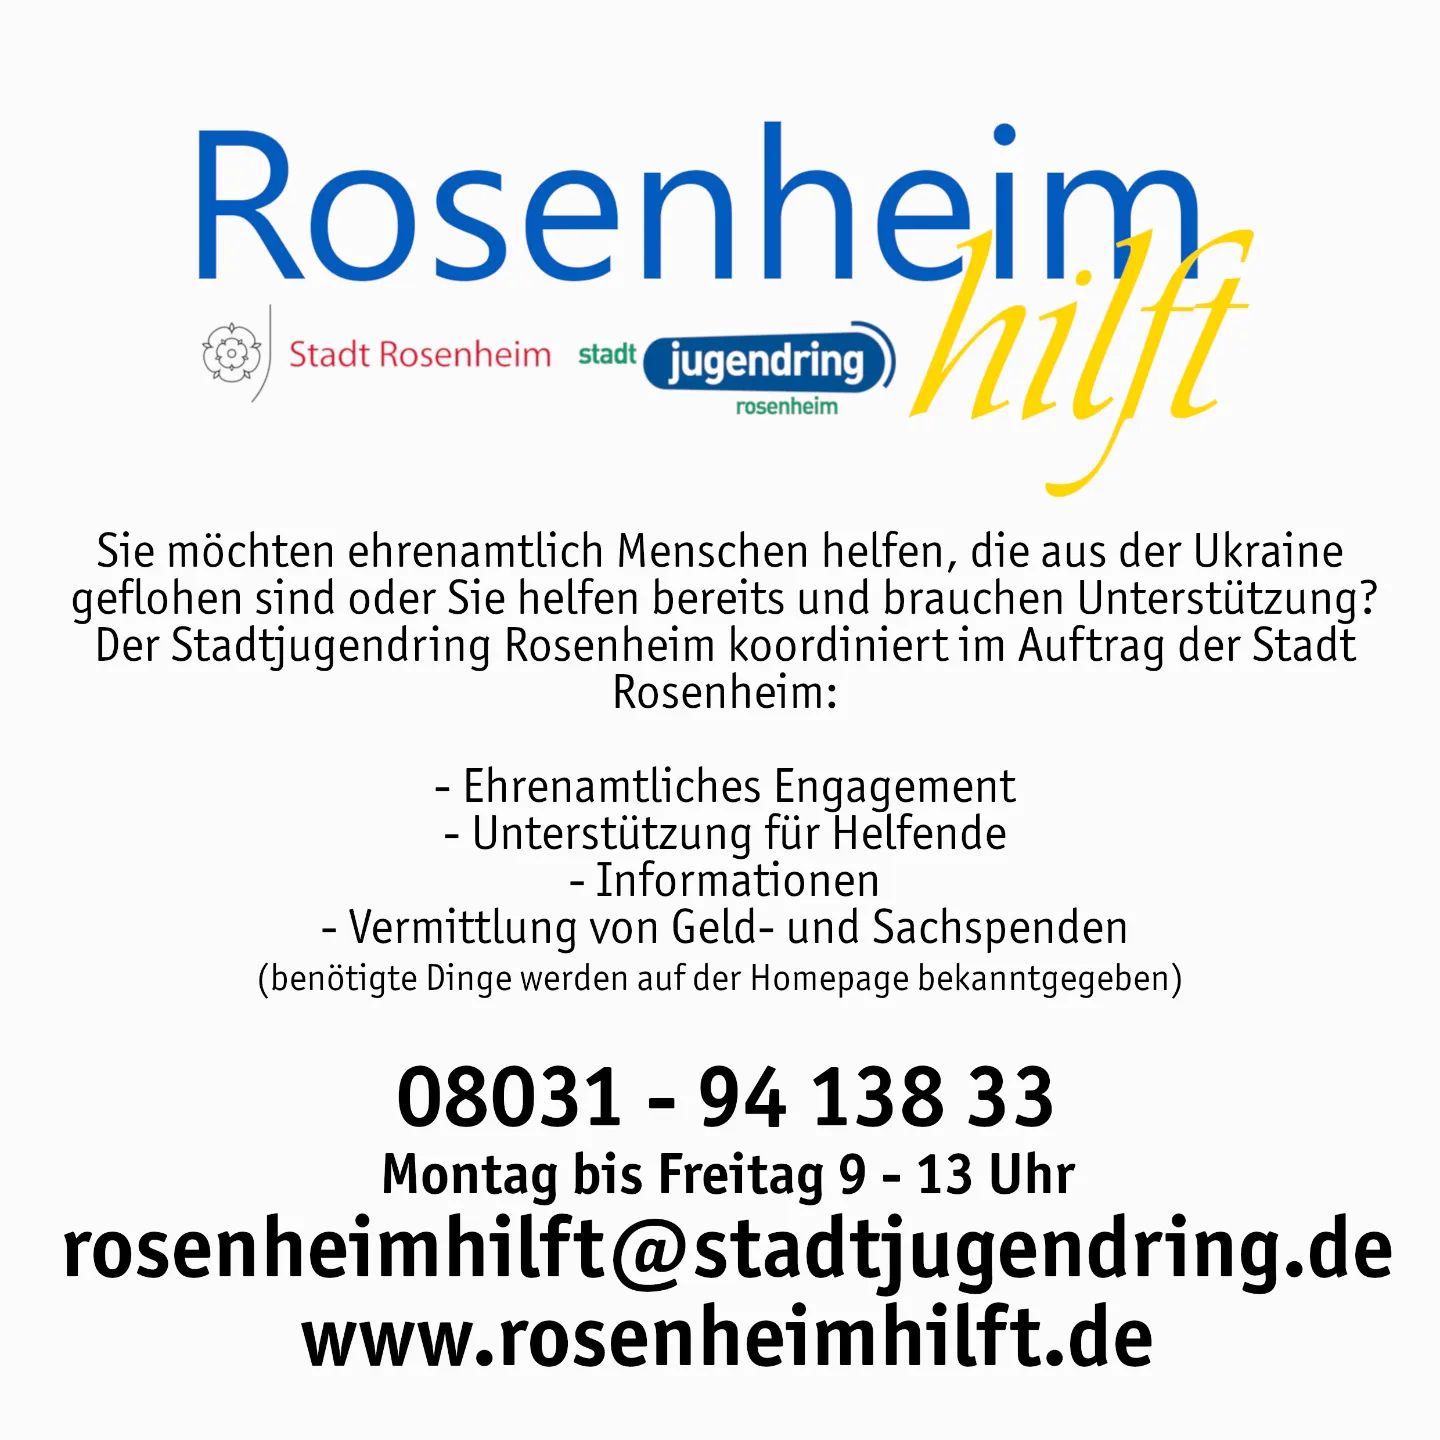 stadtjugendring_rosenheim